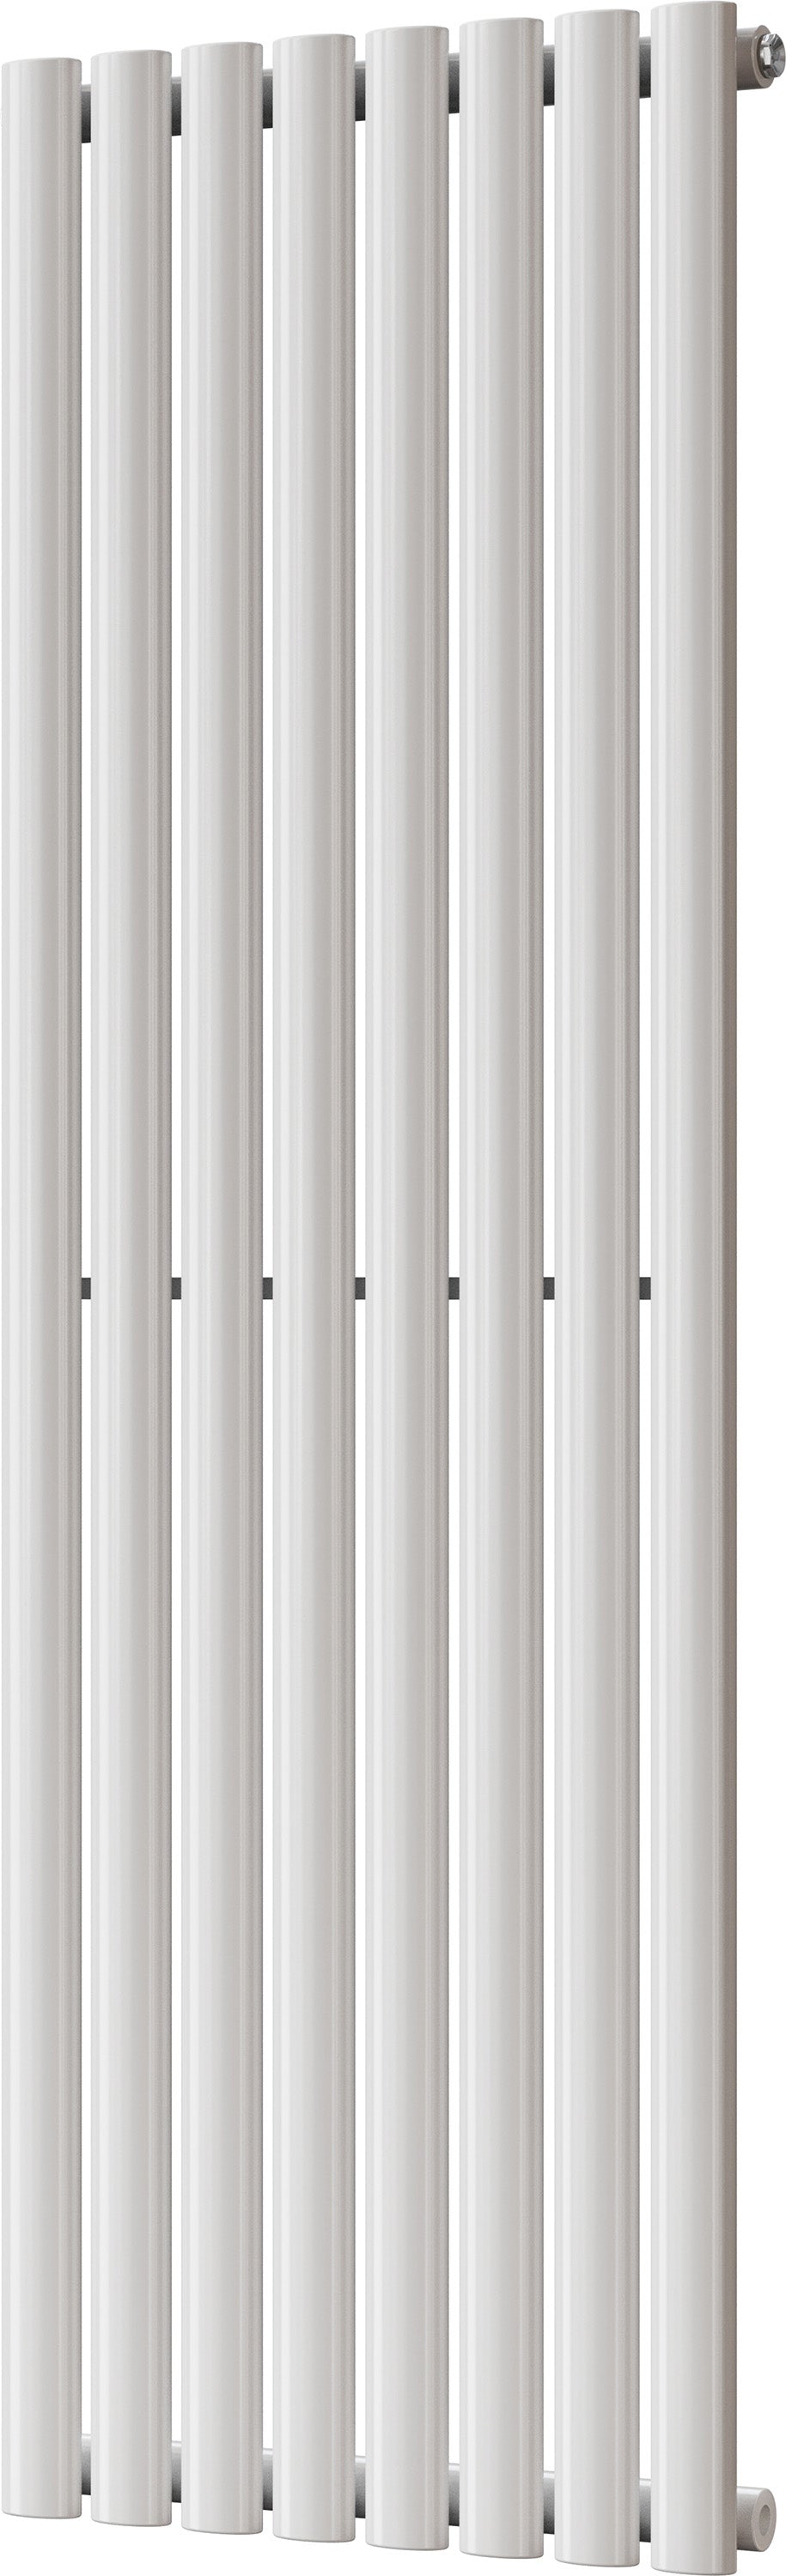 Omeara - White Vertical Radiator H1400mm x W464mm Single Panel